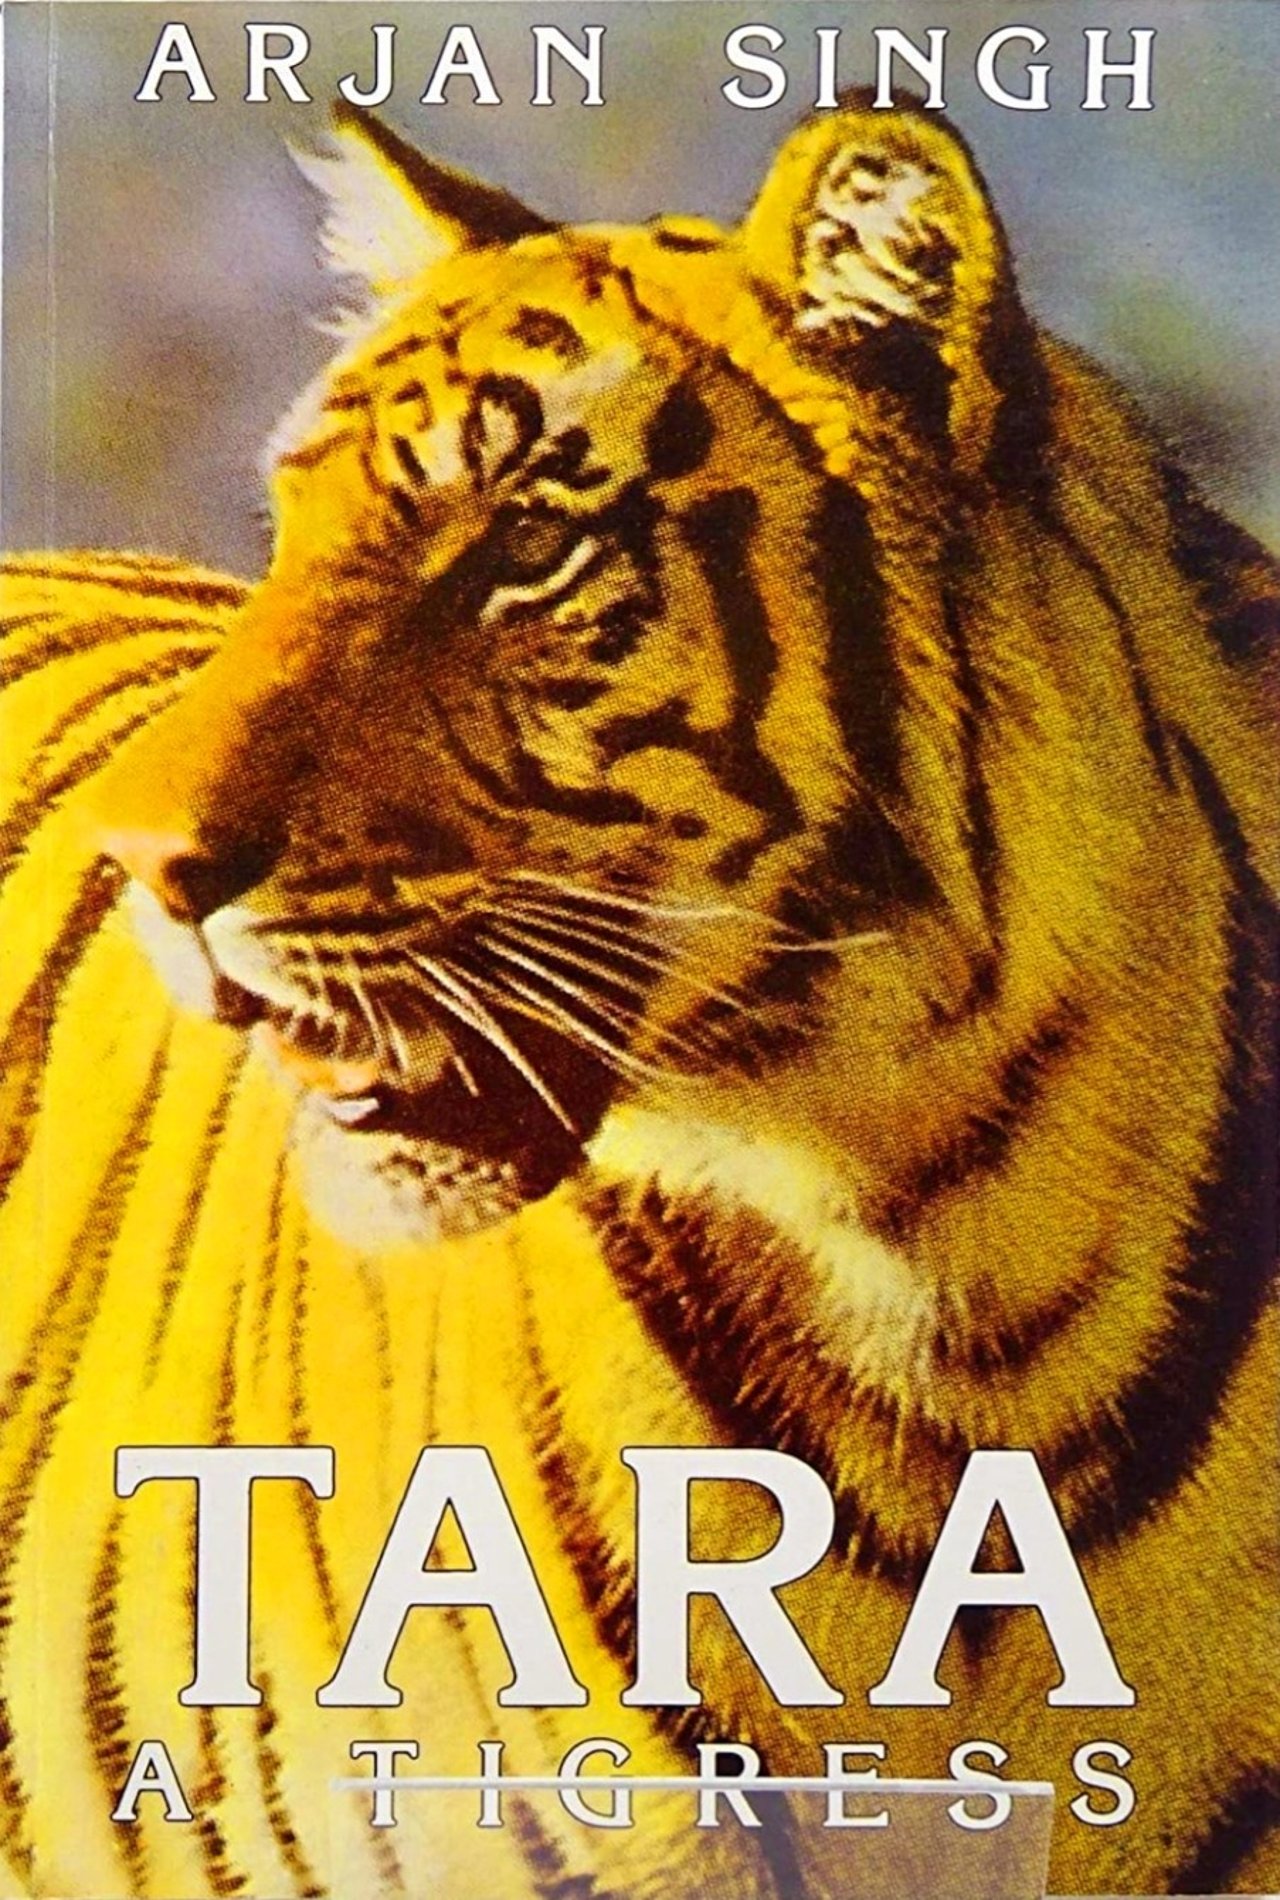 Tara, a hybrid Siberian Bengal tigress raised by Billy Arjan Singh in Dudhwa National Park Book cover image